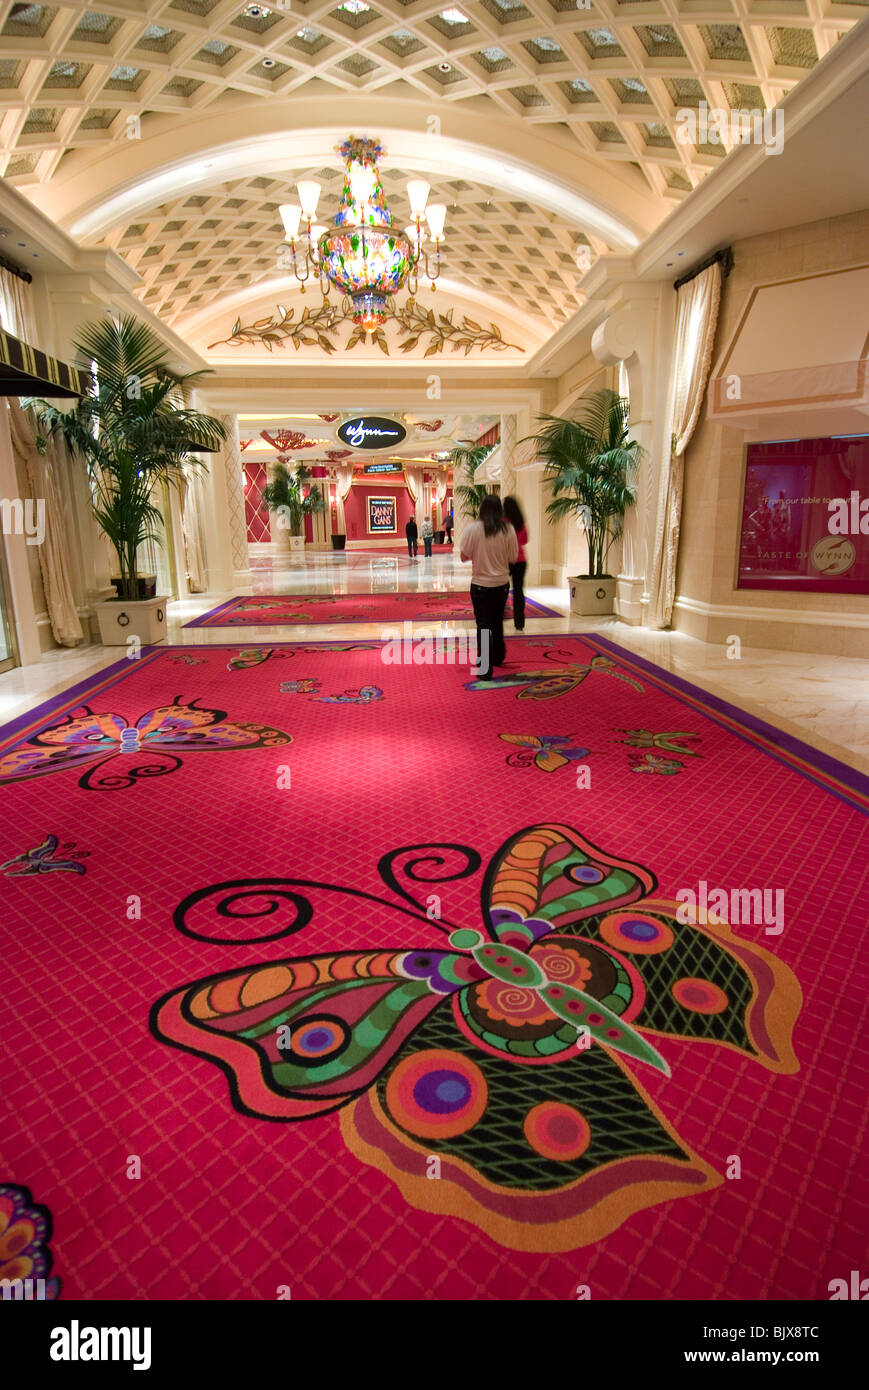 Encore (casino and hotel) at Wynn, Las Vegas, Nevada Stock Photo - Alamy